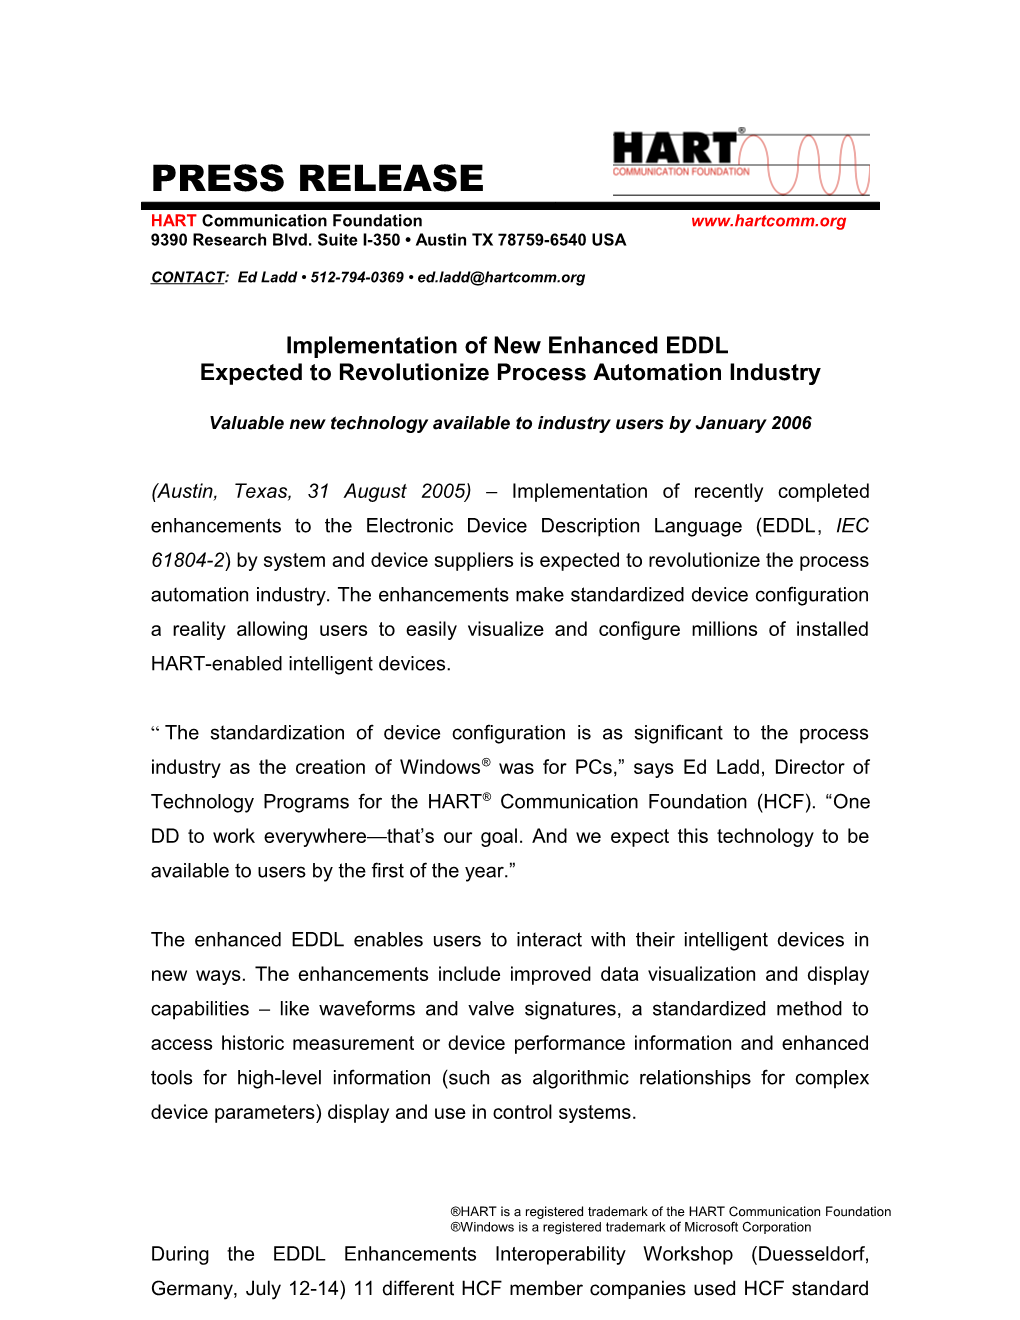 HCF Press Release